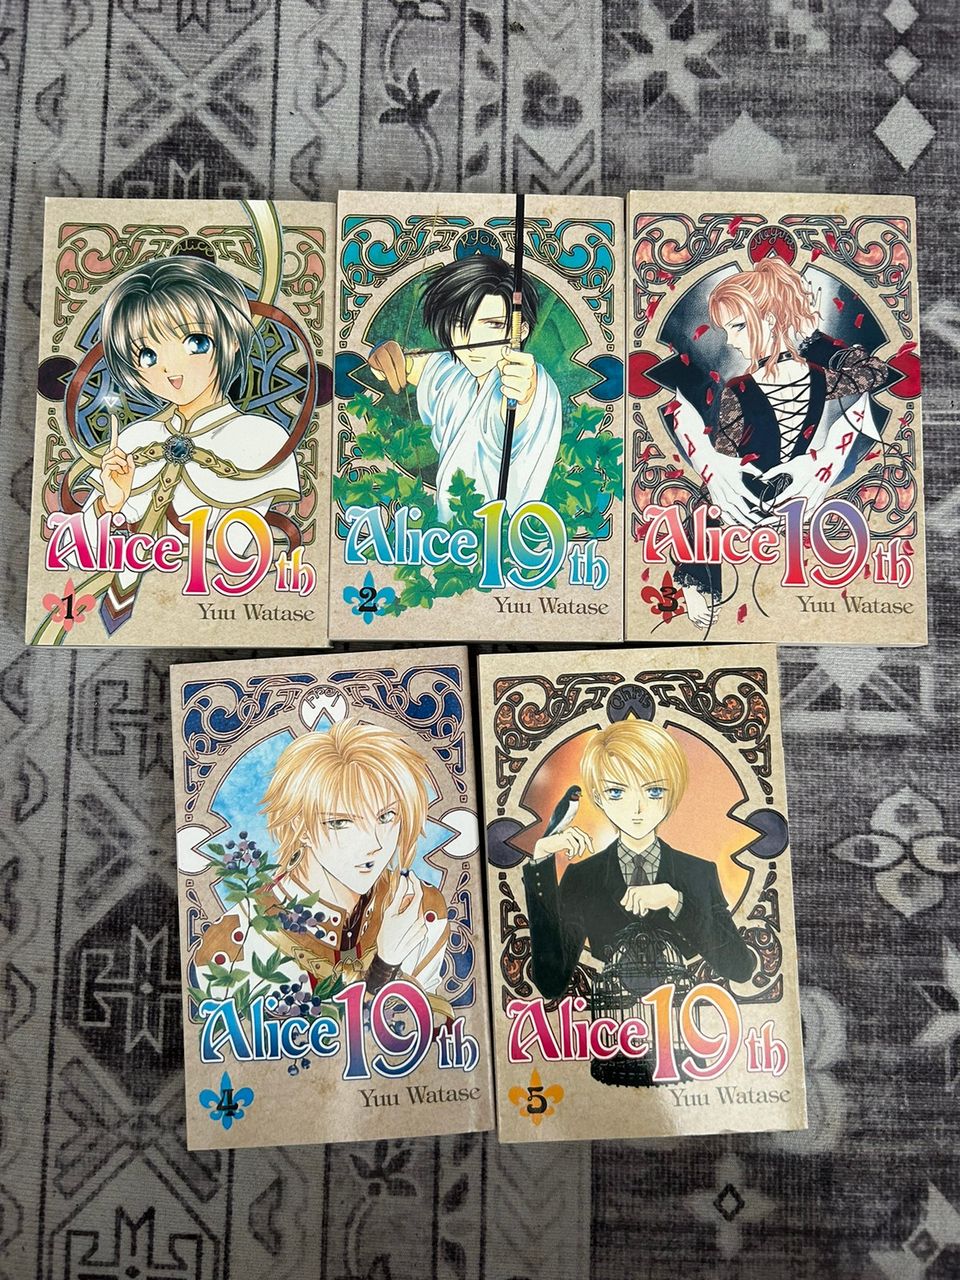 Alice 19th manga